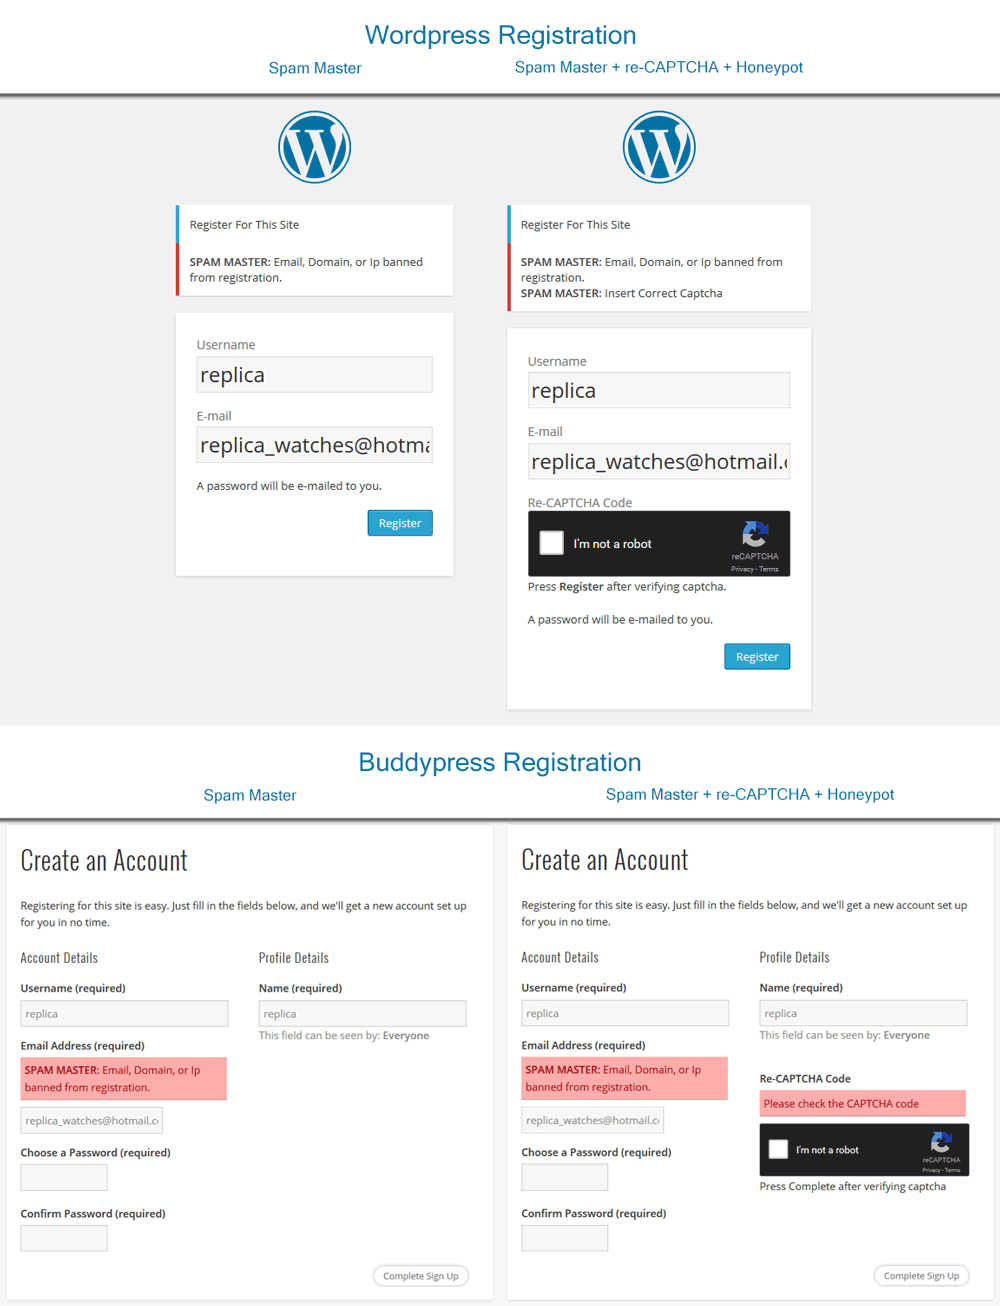 Wordpress Registration. Spam Master with re-CAPTCHA plus Honeypot traps